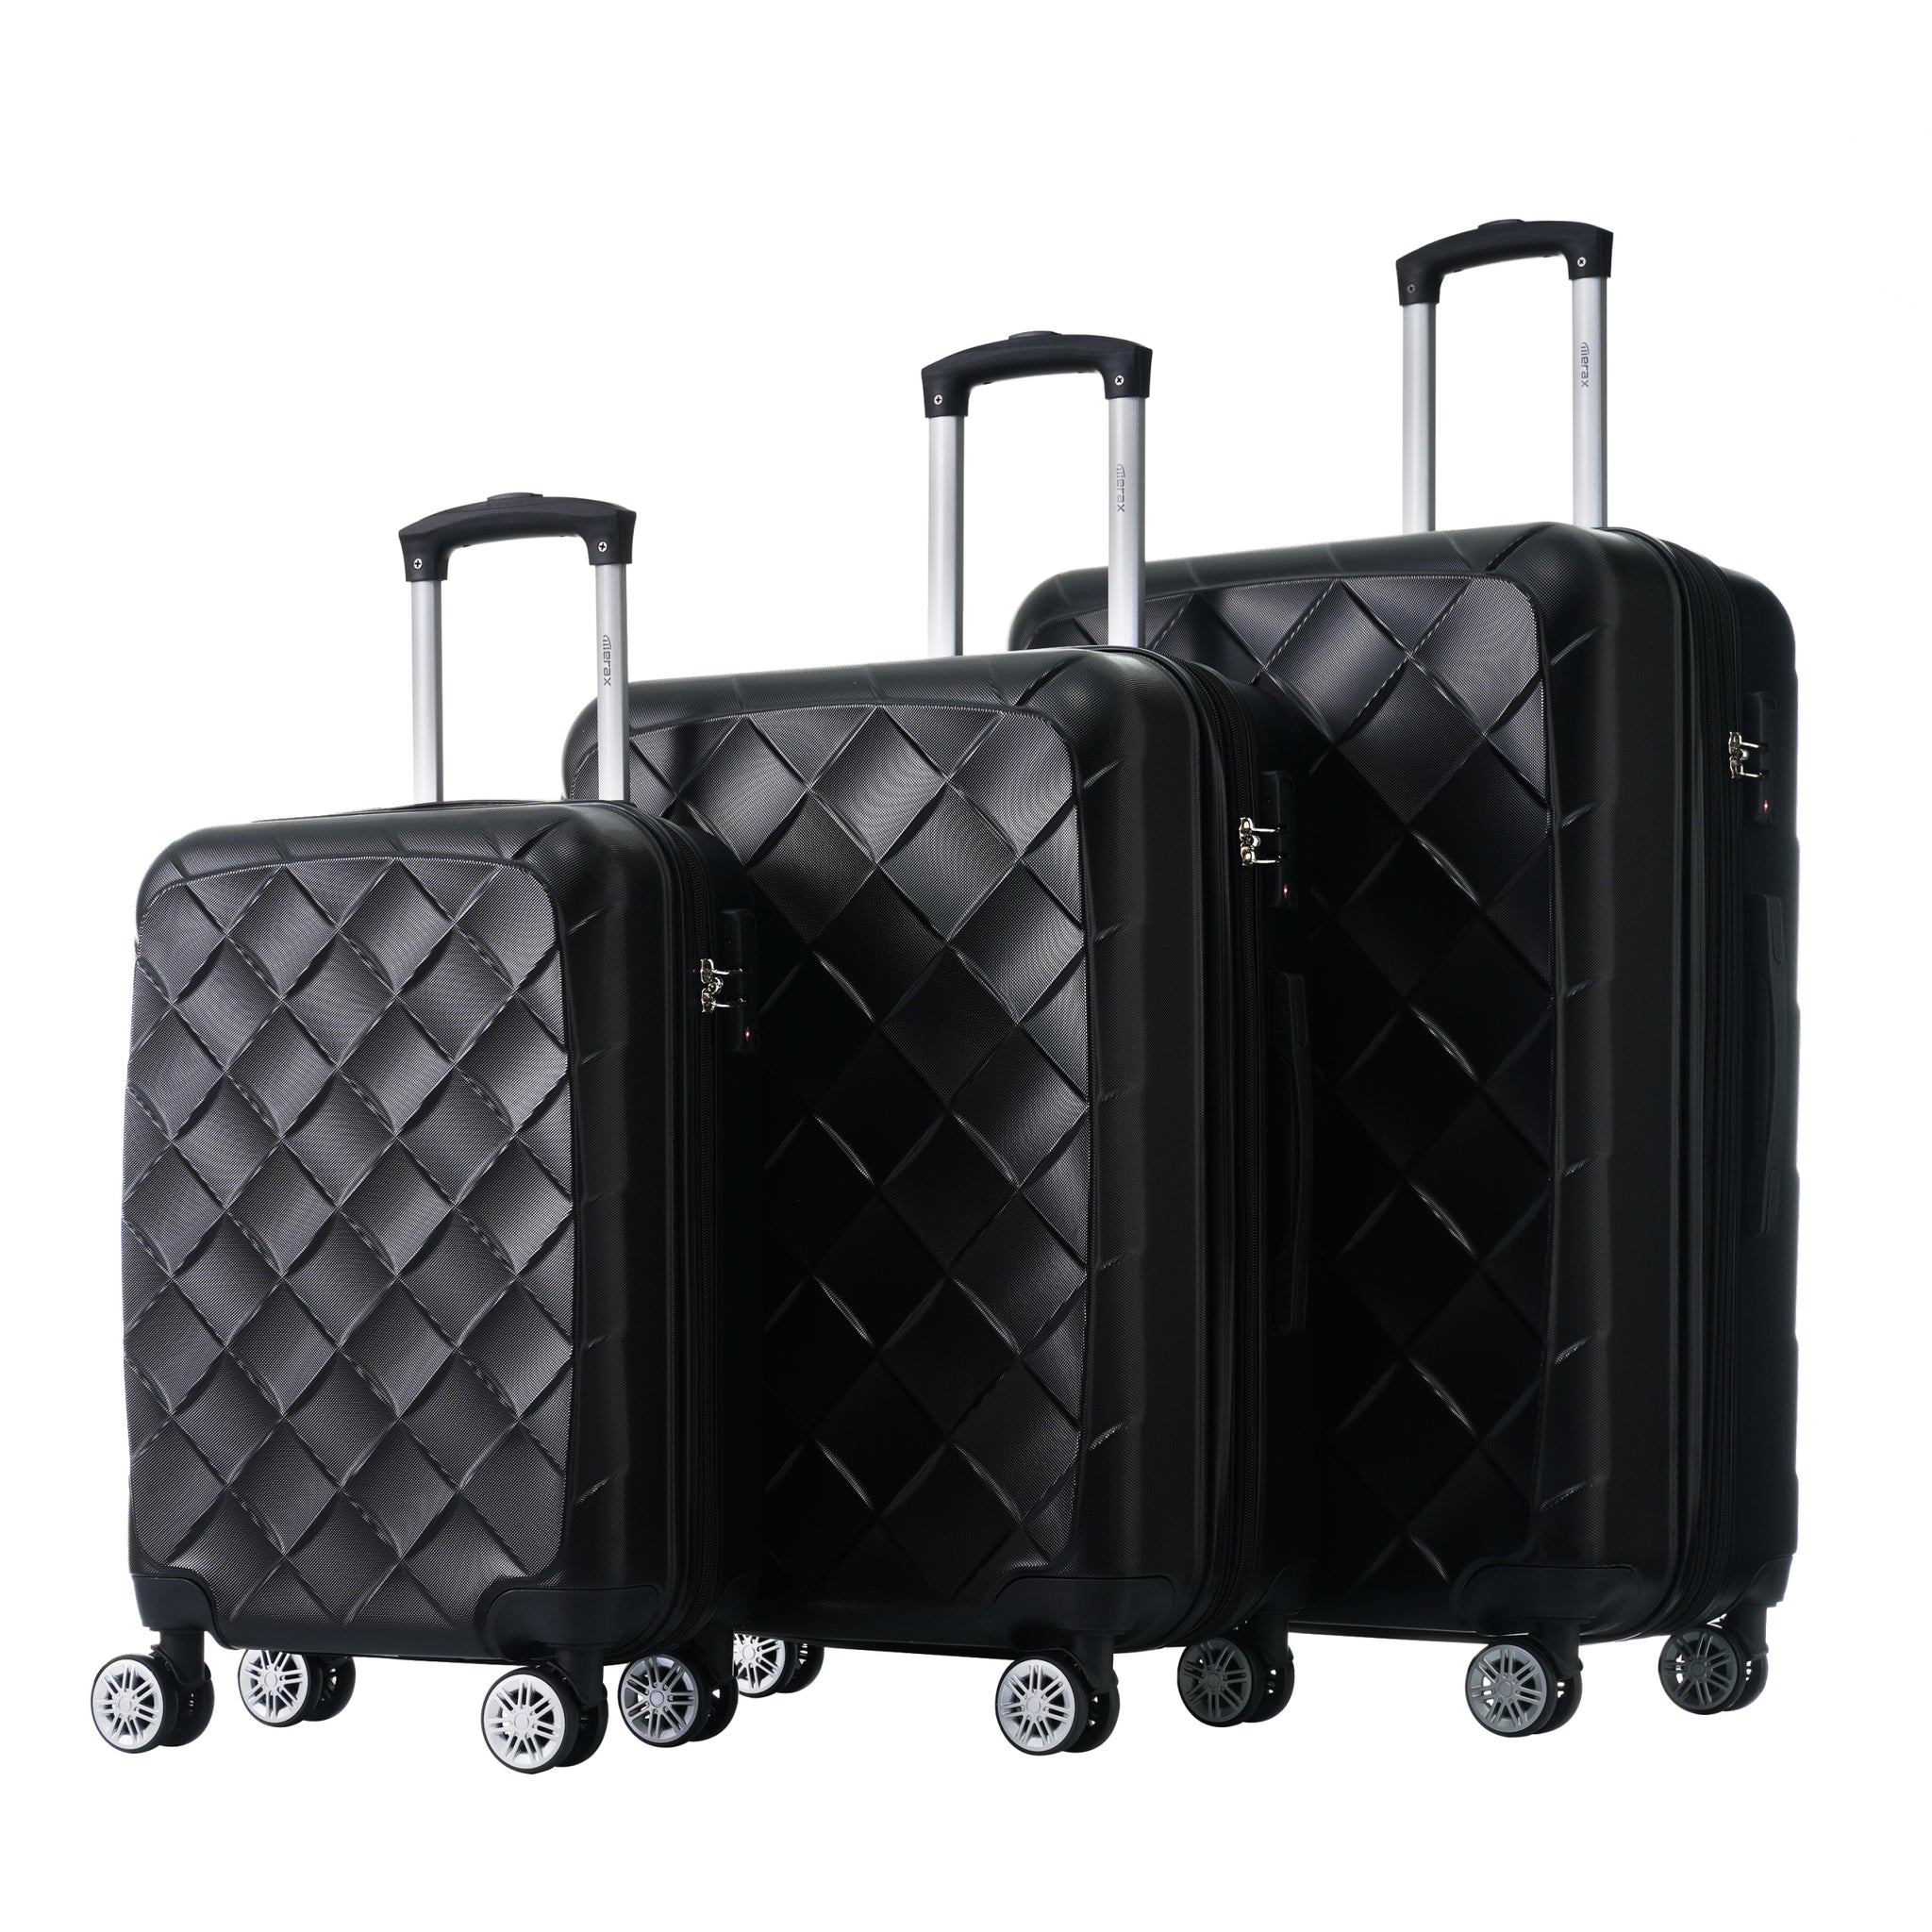 3 Piece Luggage Set Suitcase Set, ABS Hard Shell